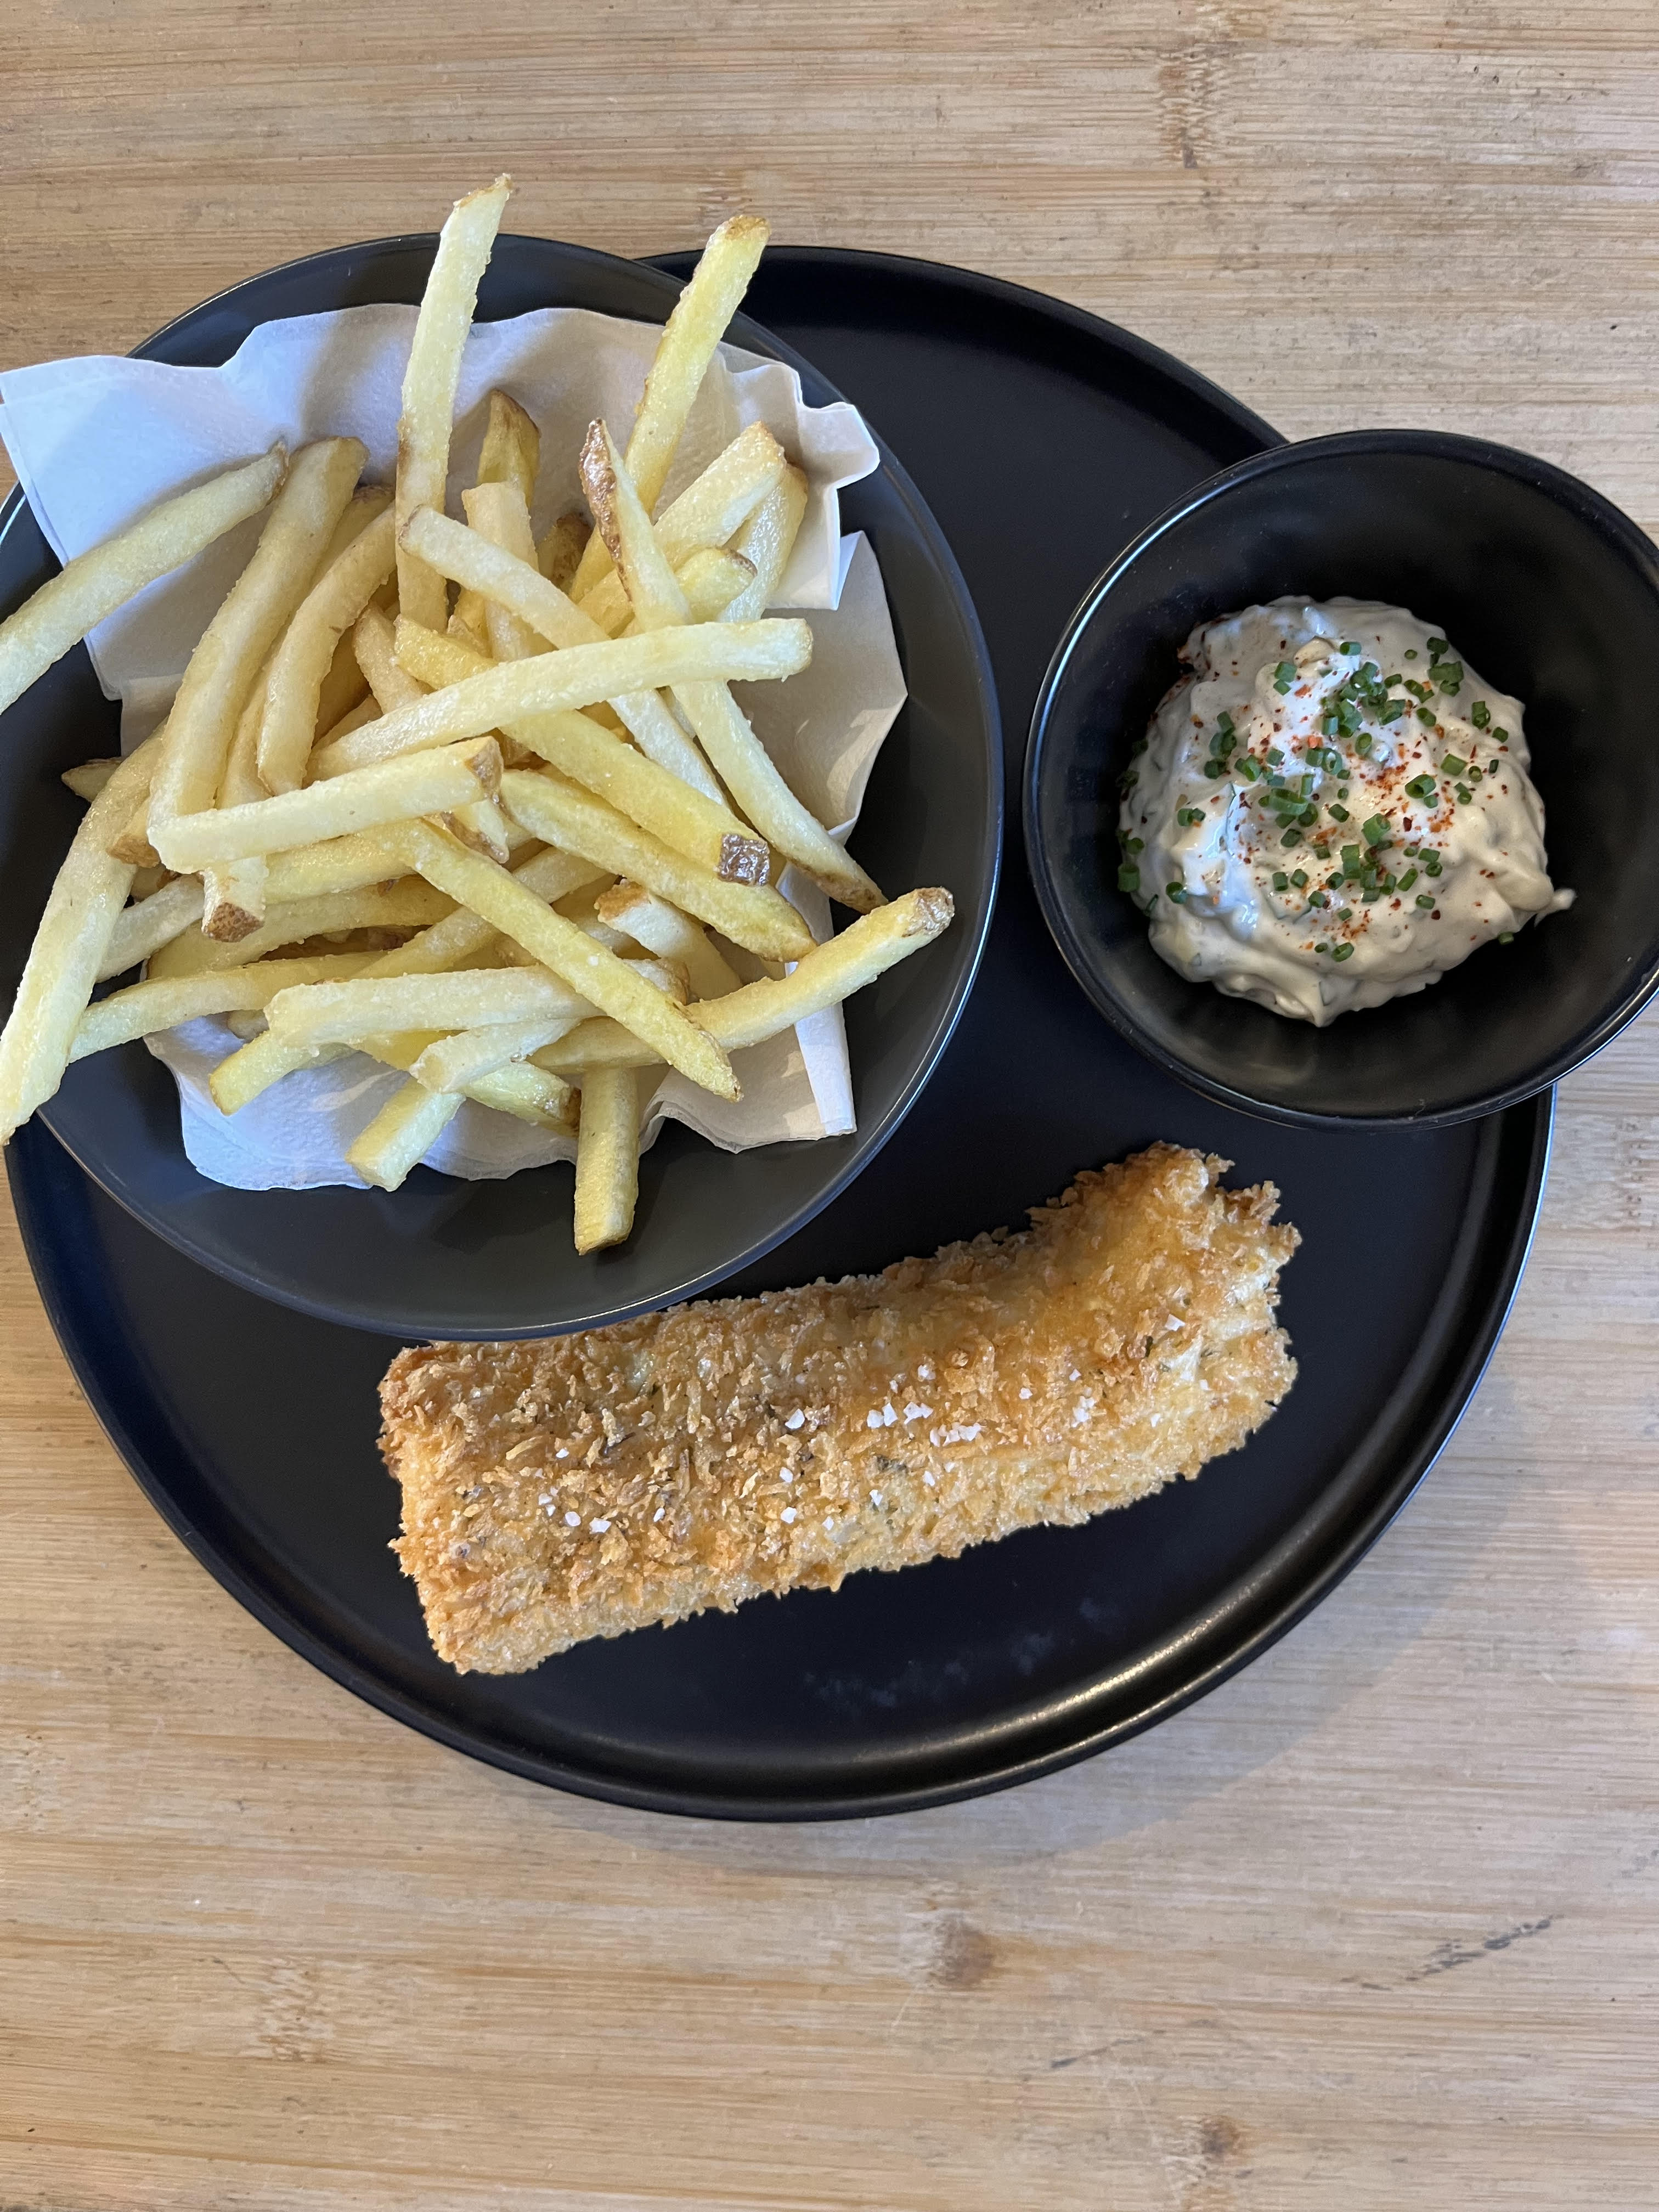 Fish and chips faits maison de juliene, sauce tartare